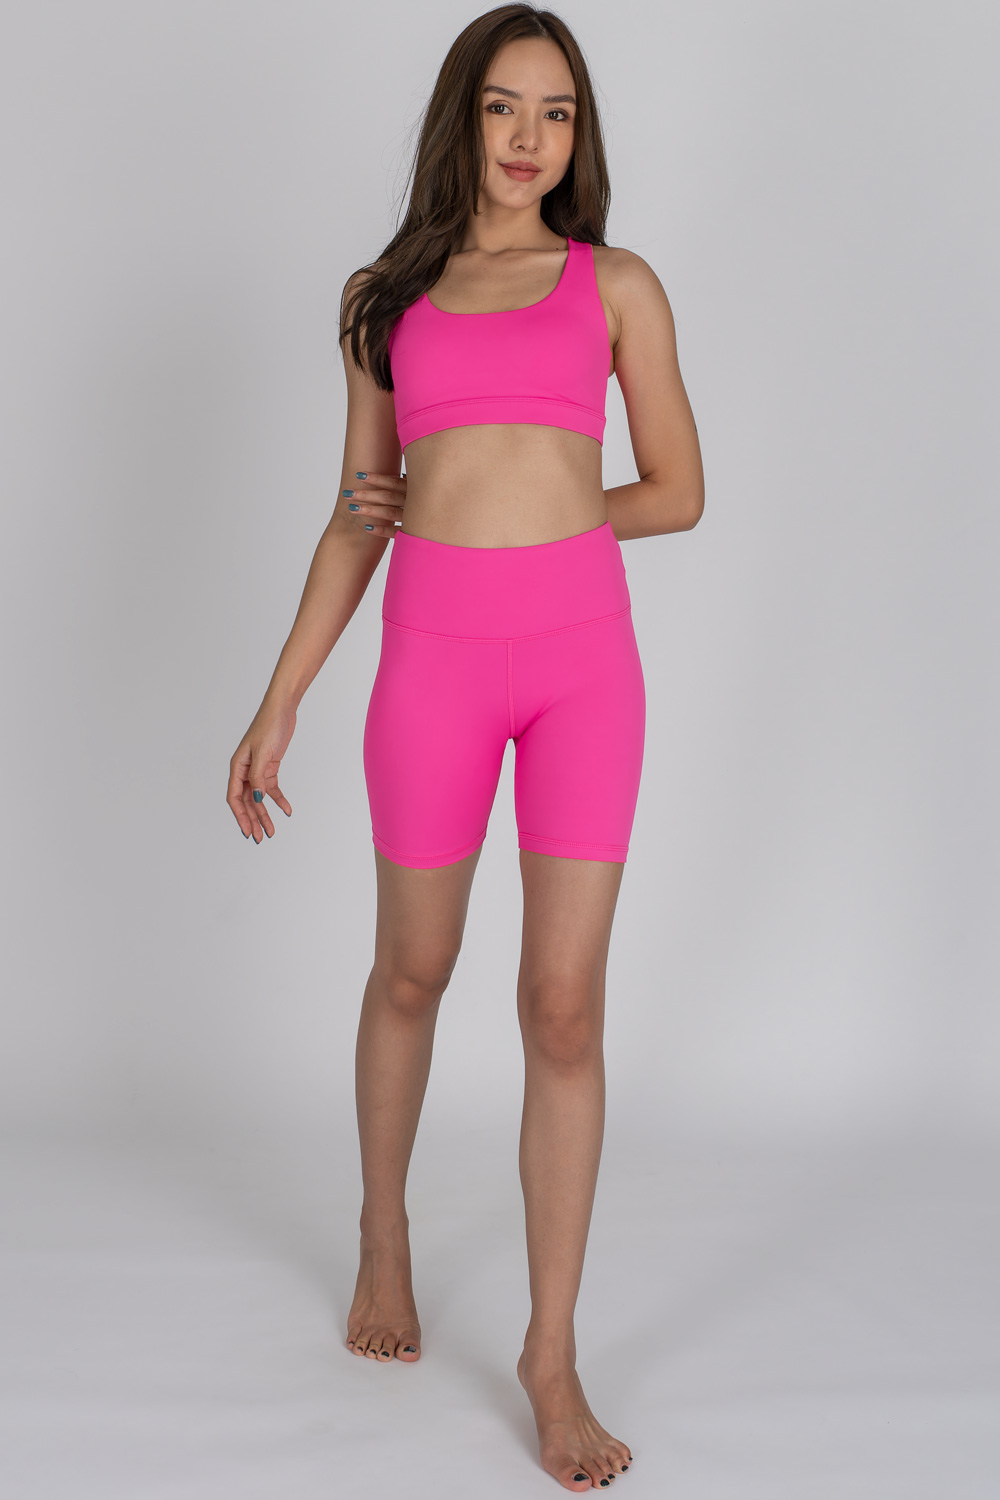 X-Strap Sports Bra - Flamingo - Chandra Yoga & Active Wear